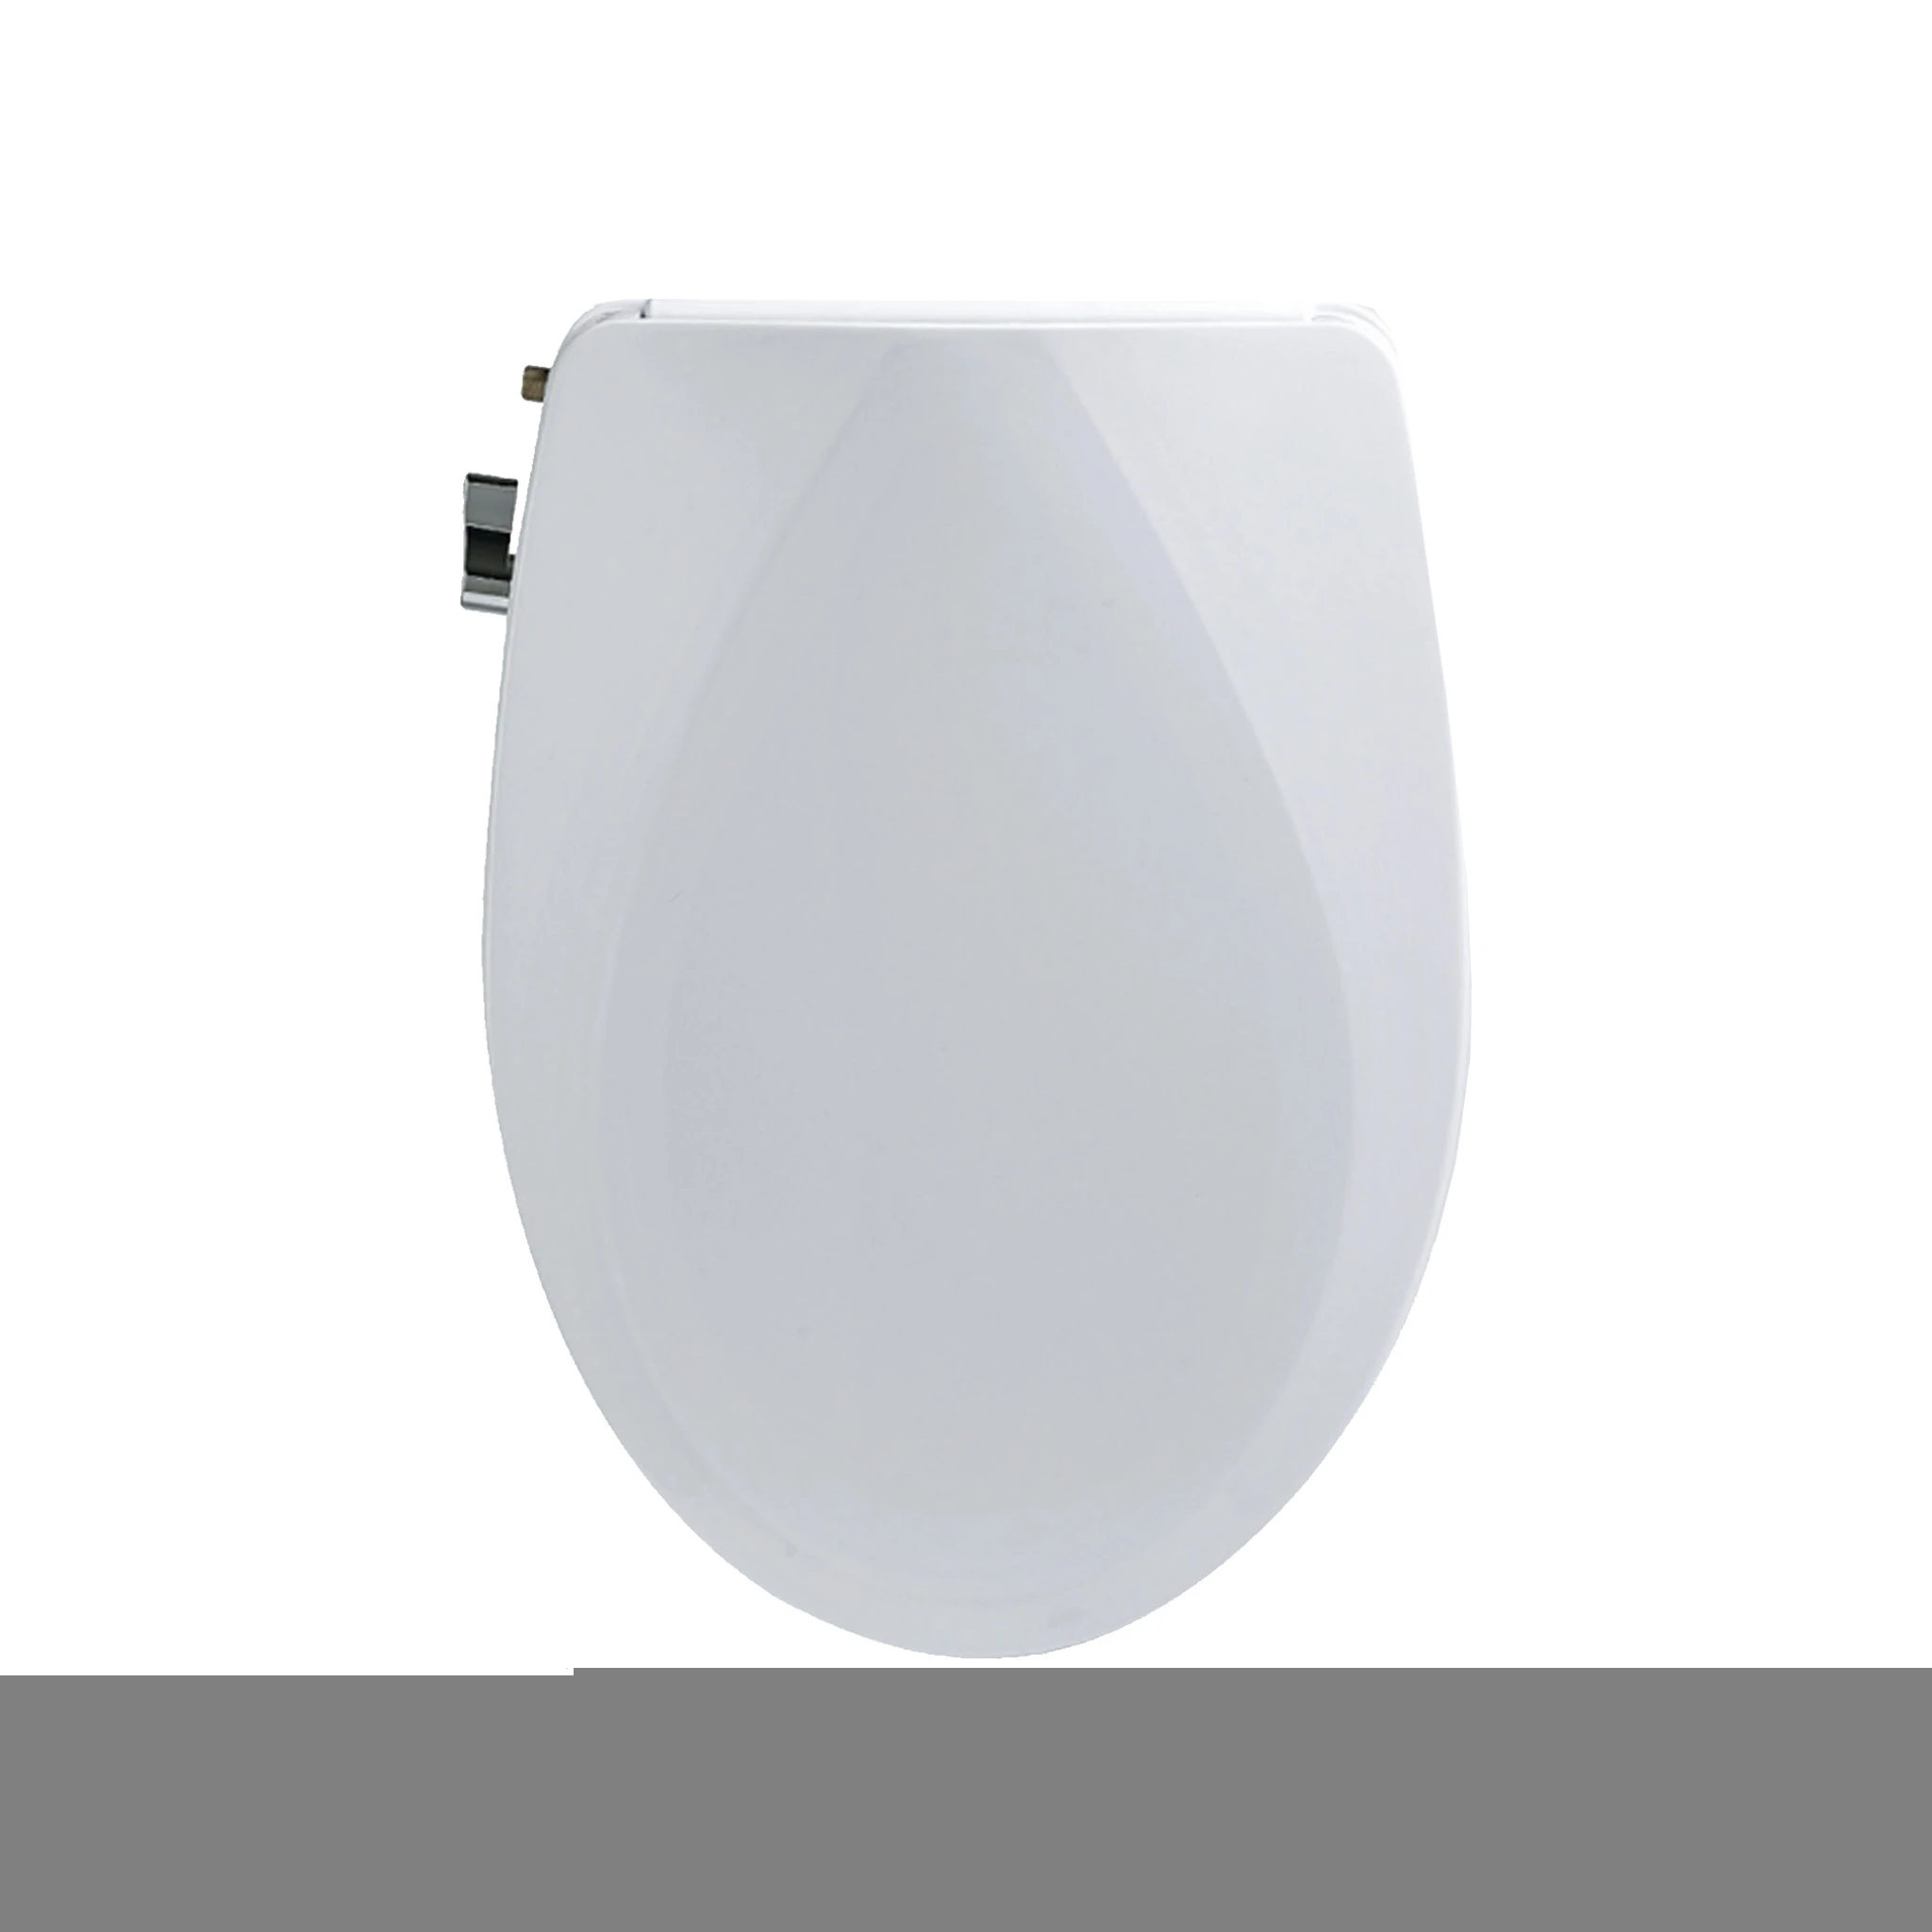 Bidet Toilet Seat with Built-in Bidet Water Spray nozzles  Chinese wc Toilet Bidet Toilet